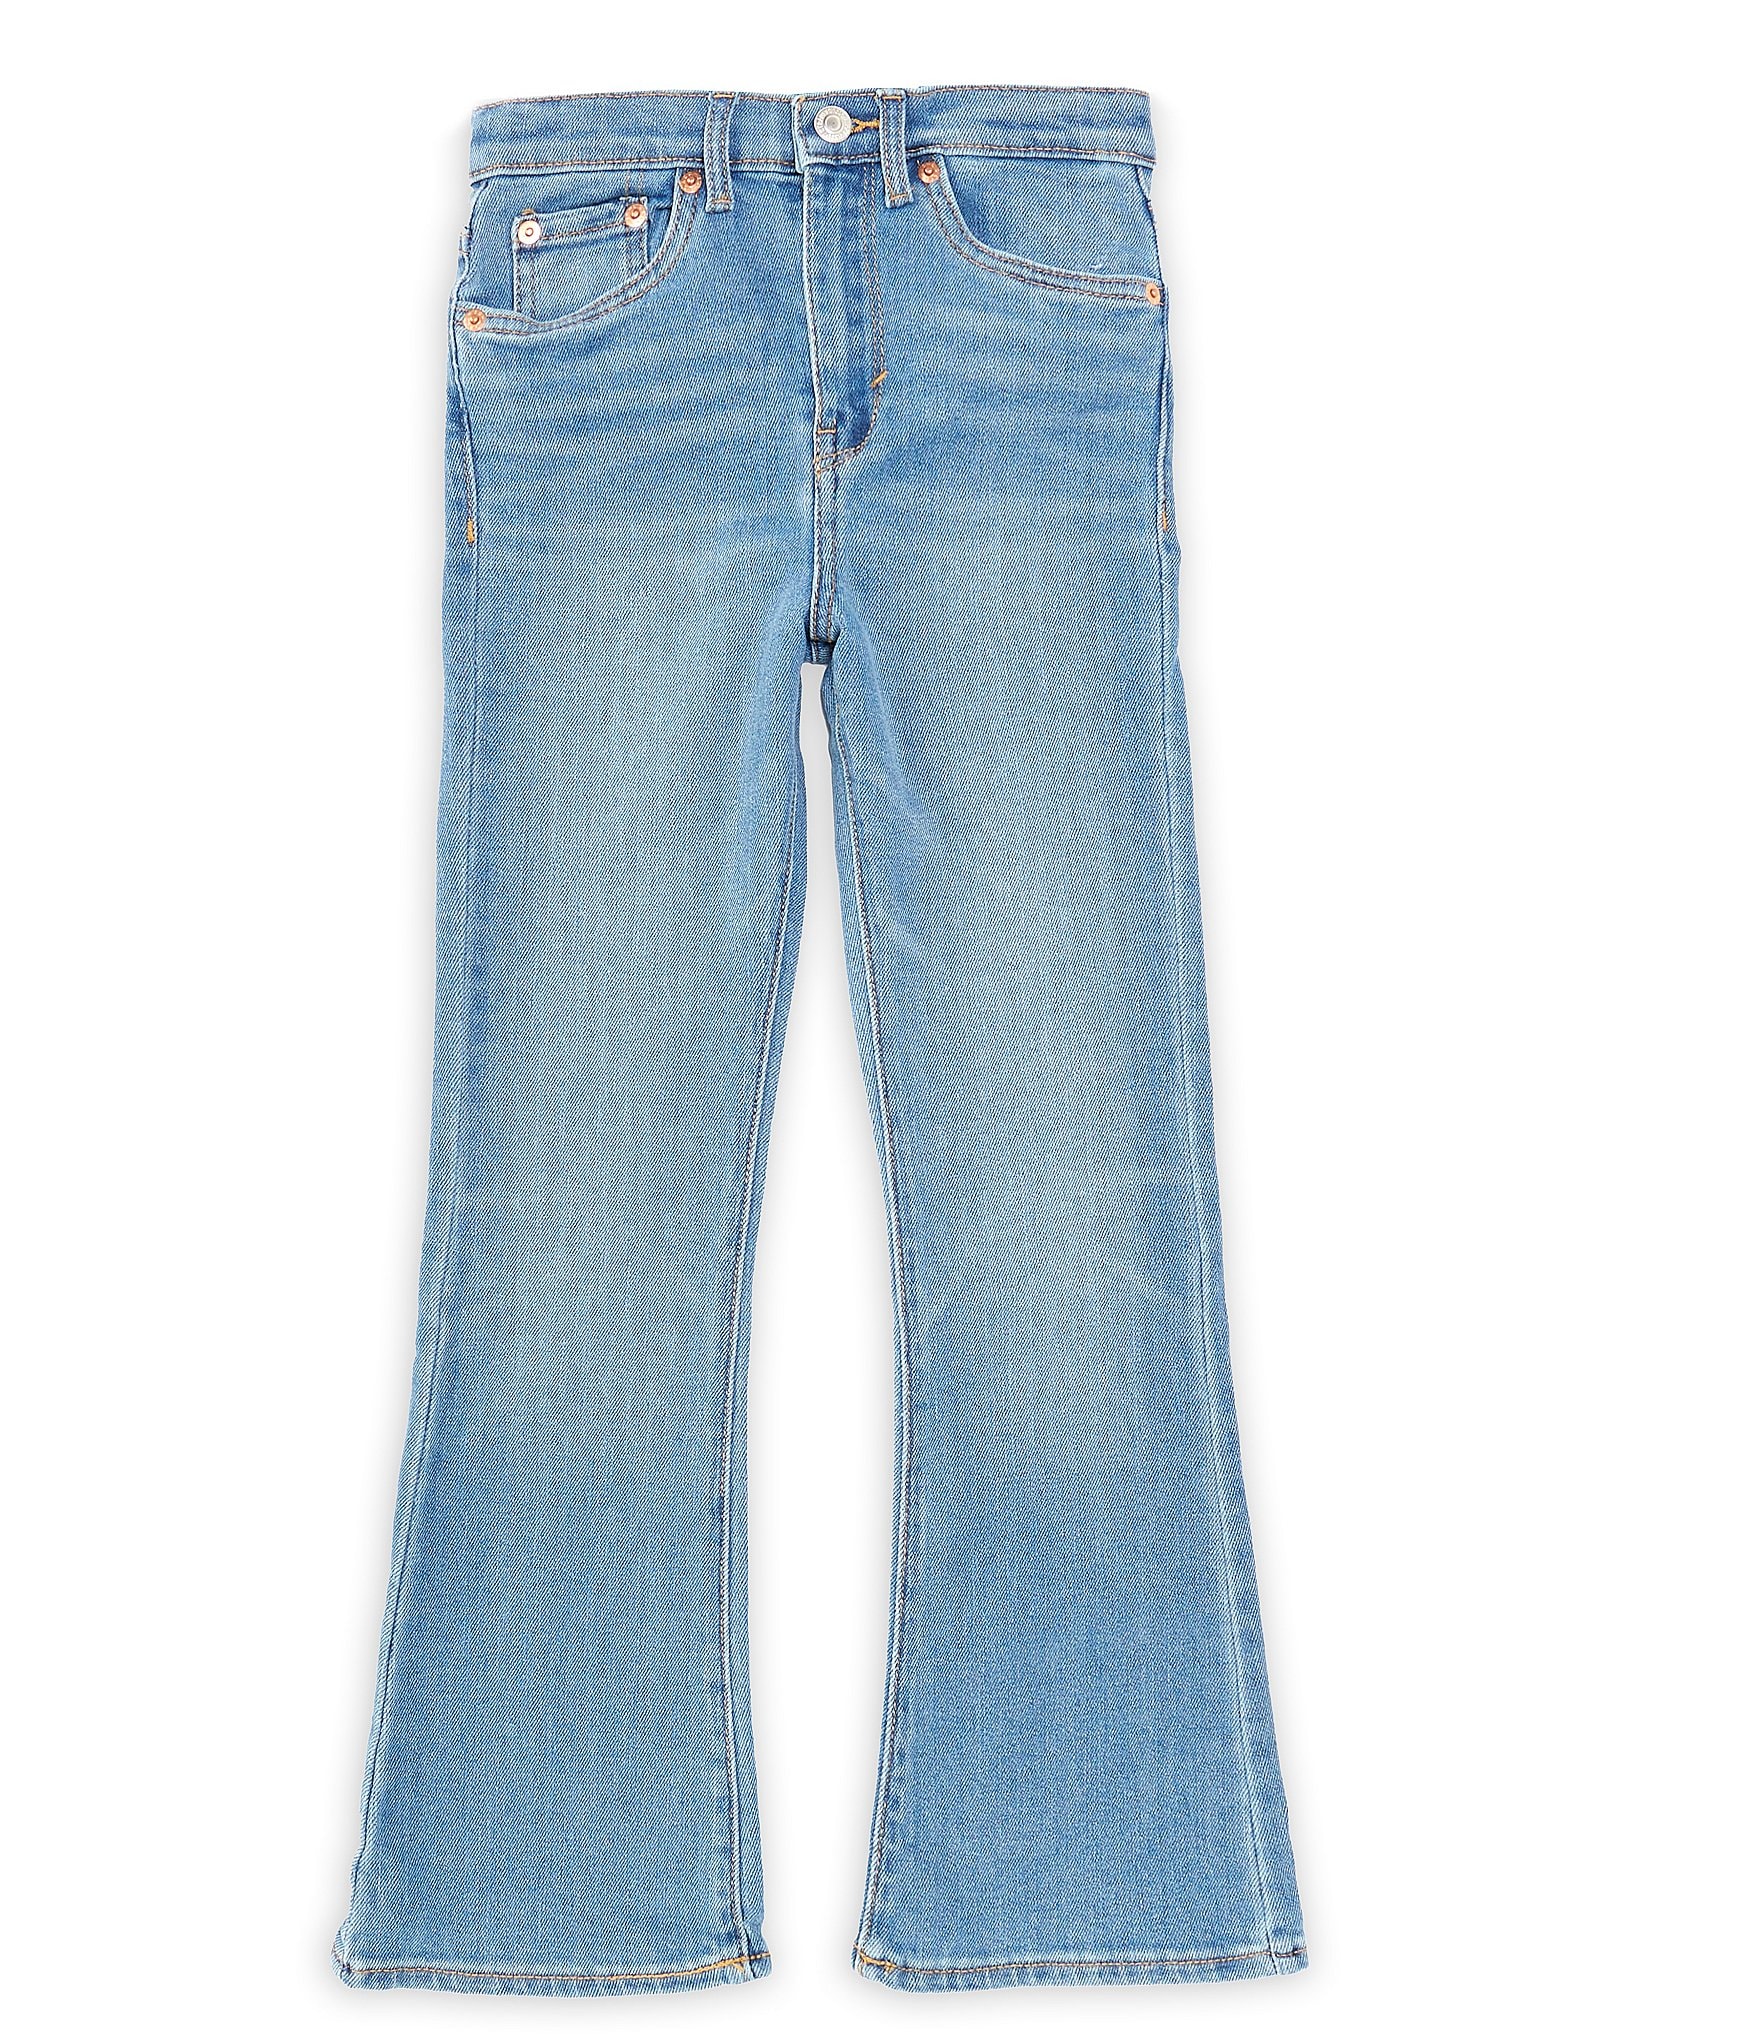 726™ High Rise Flare Jeans Big Girls 7-16 - Light Wash